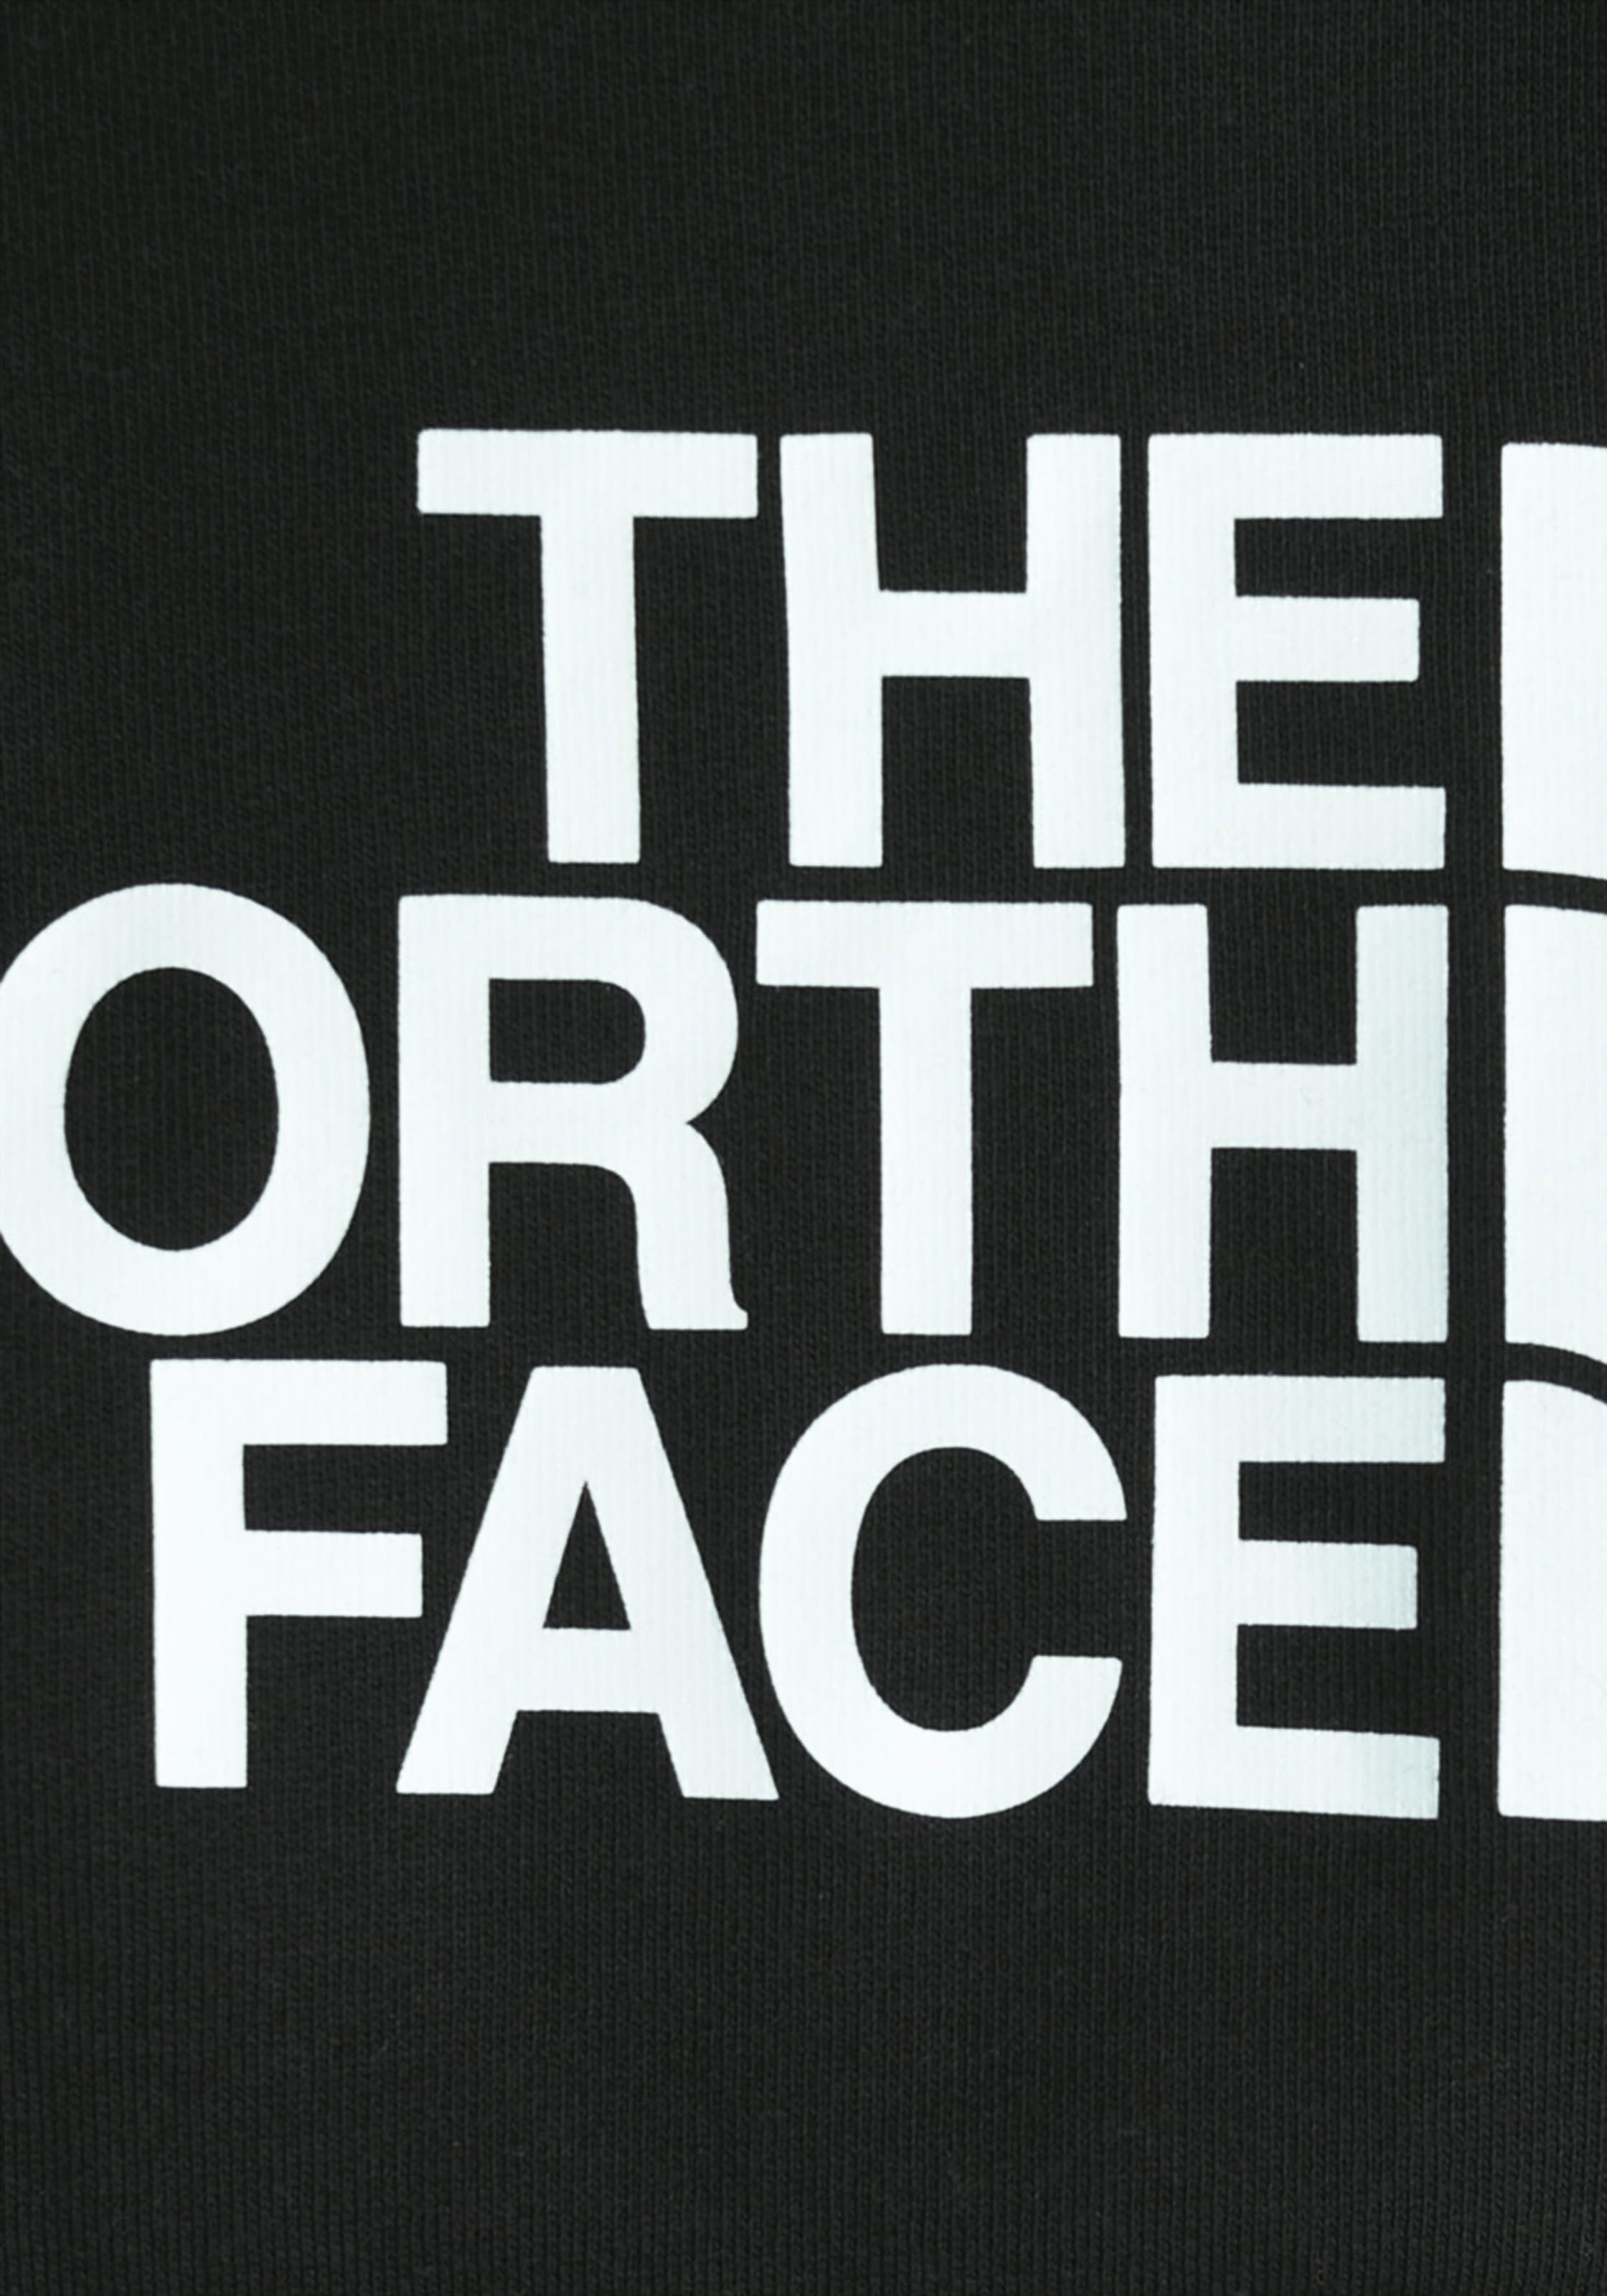 CREW »W PEAK - The DREW Face (1 bei North Sweatshirt EU«, tlg.)